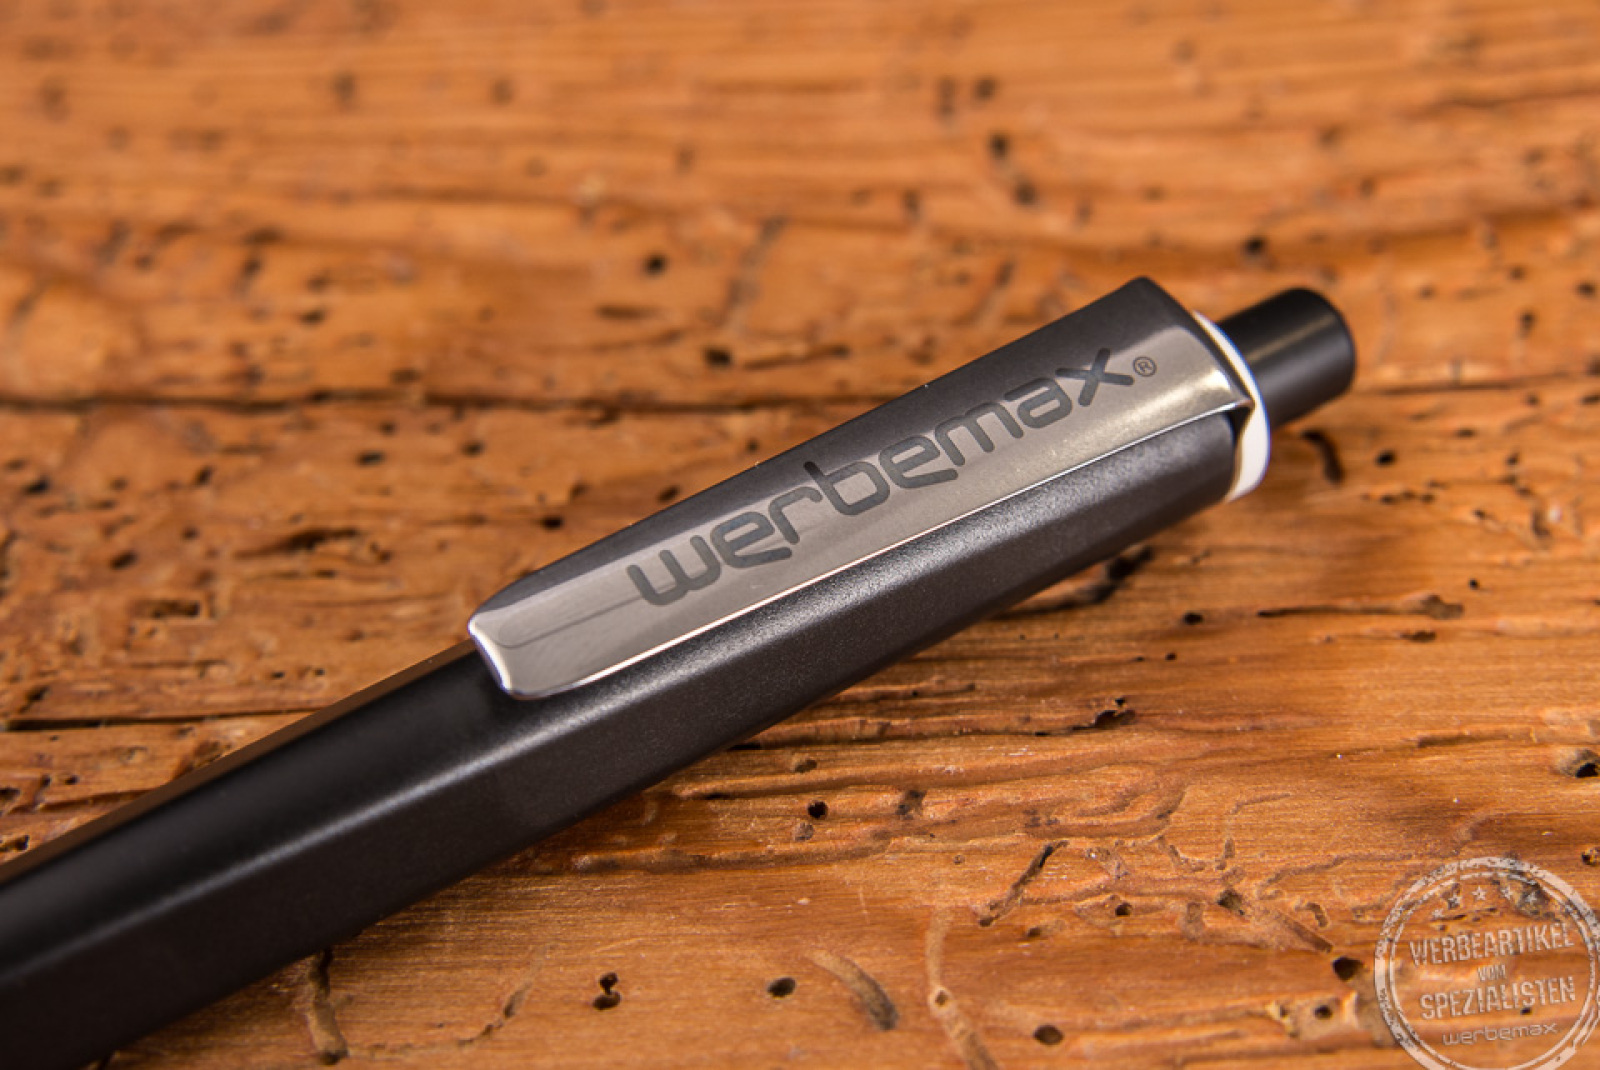 Schwarzer Kugelschreiber Ritter Pen mit Beschriftung werbemax auf dem Metallclip als Werbeartikel.